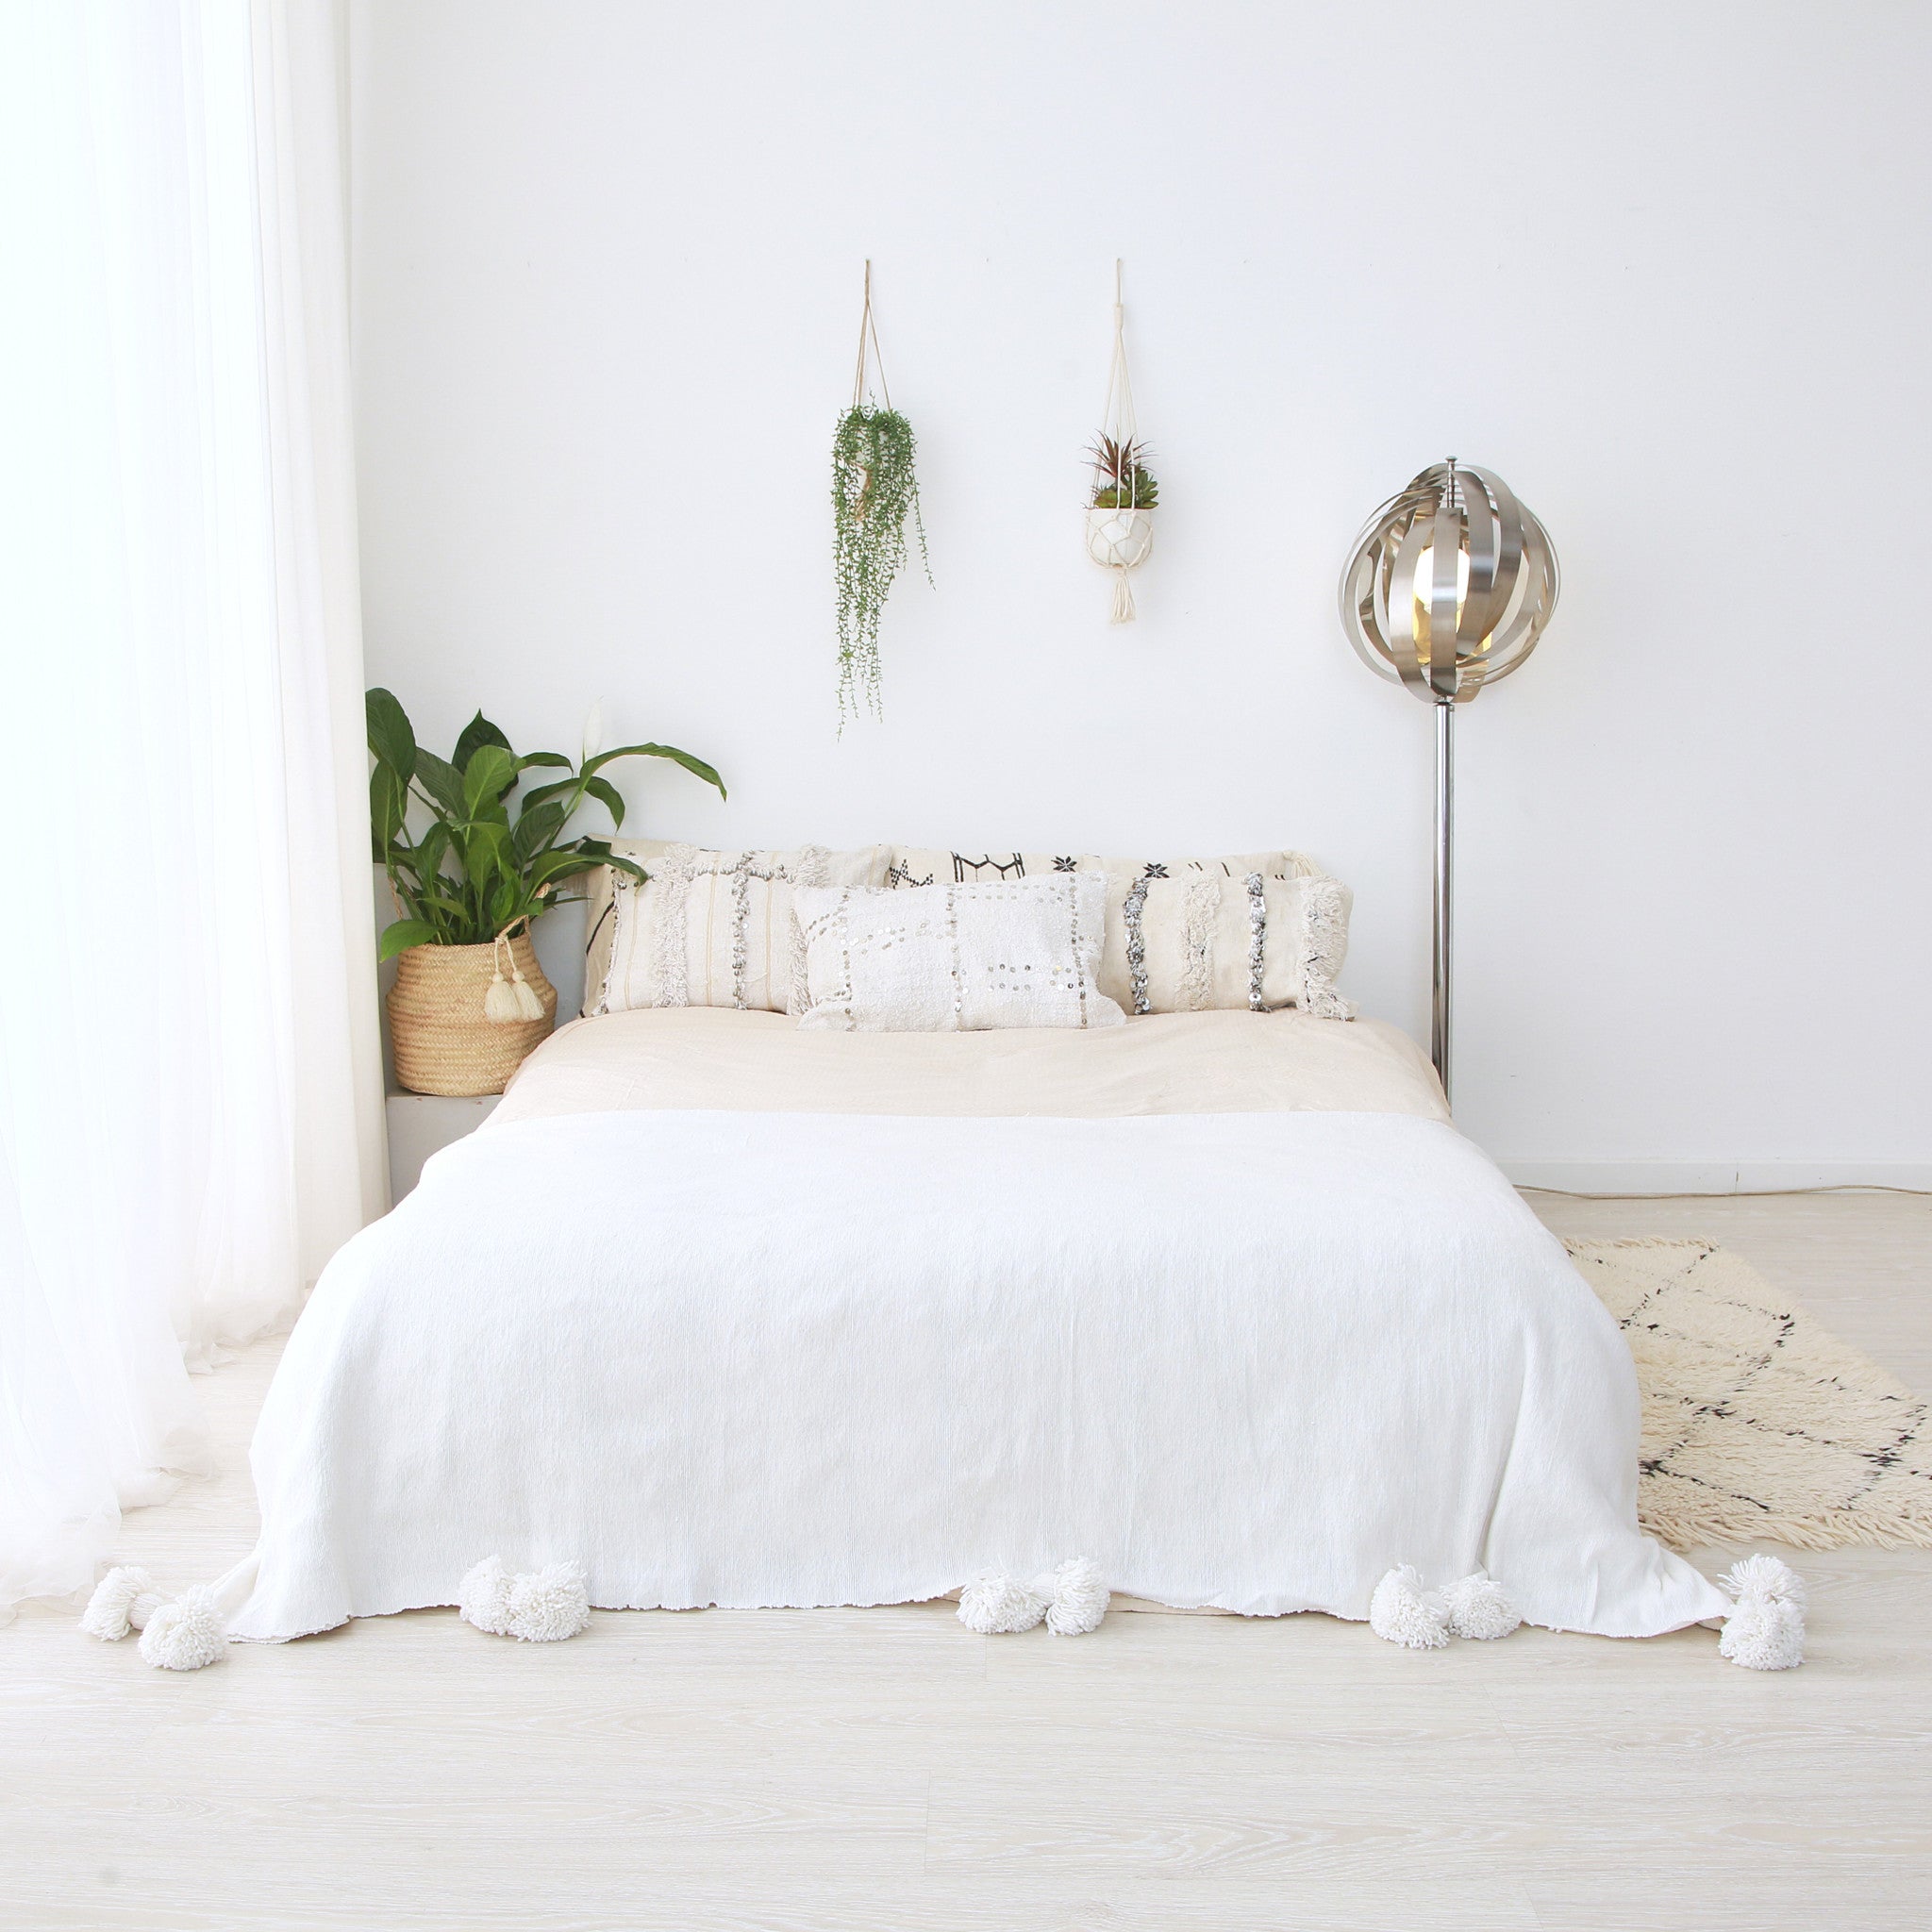 White furnishing blanket